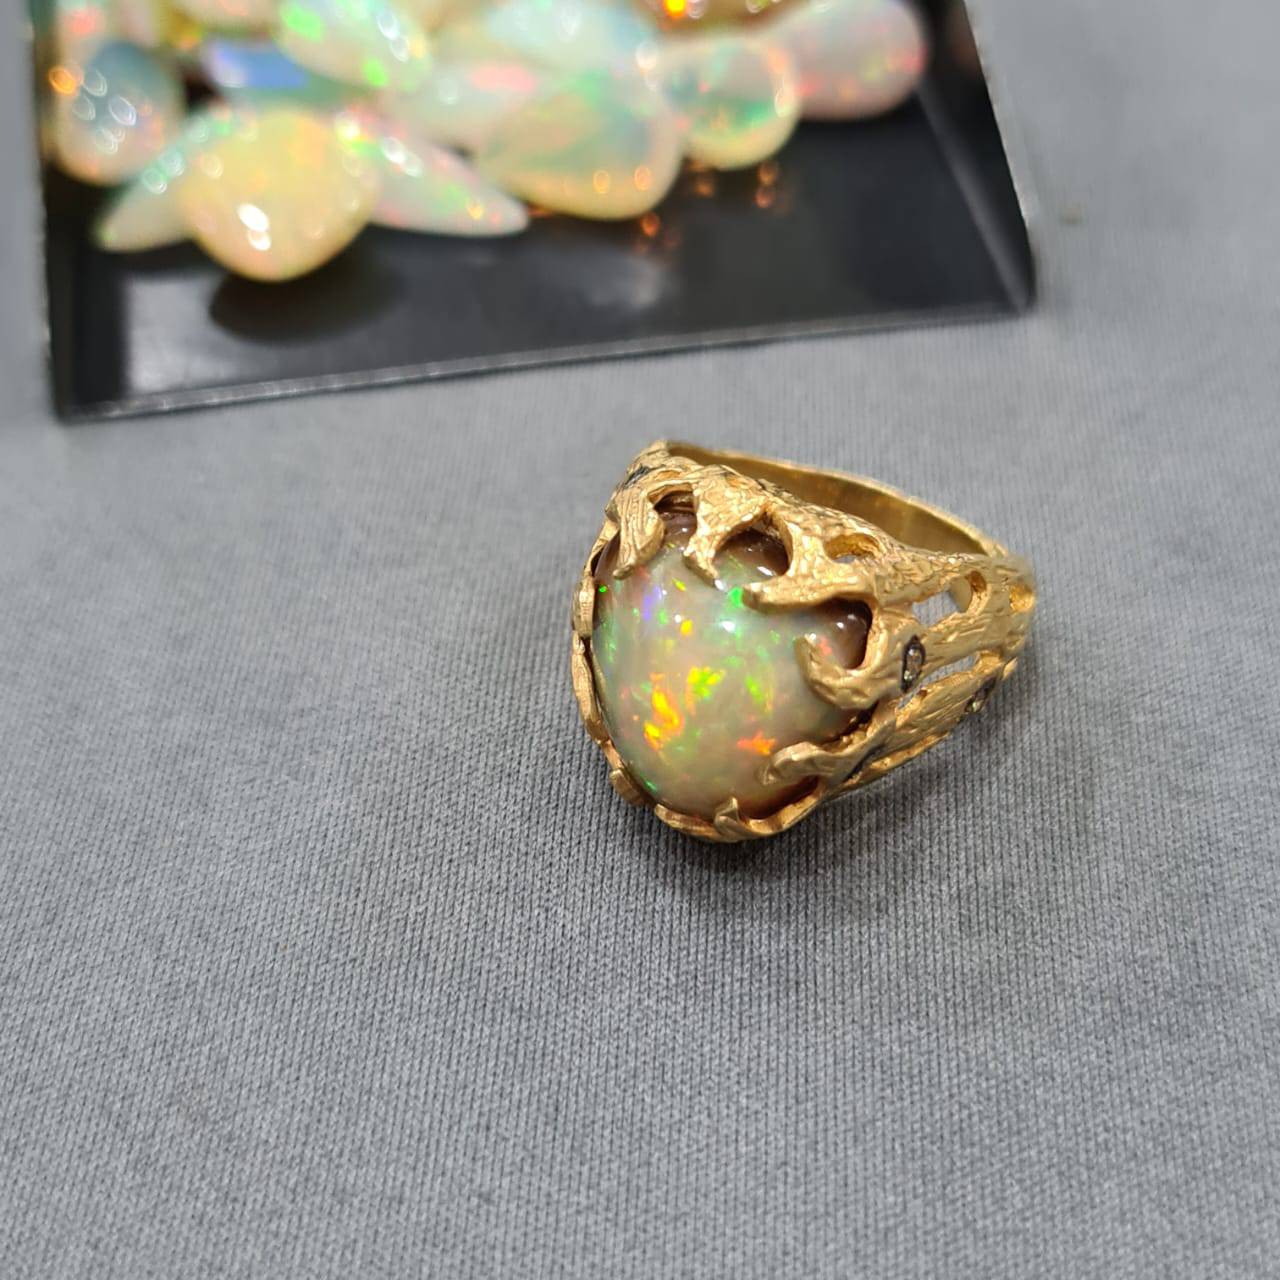 18KT Gold Opal Ring with Diamonds - The LabradoriteKing